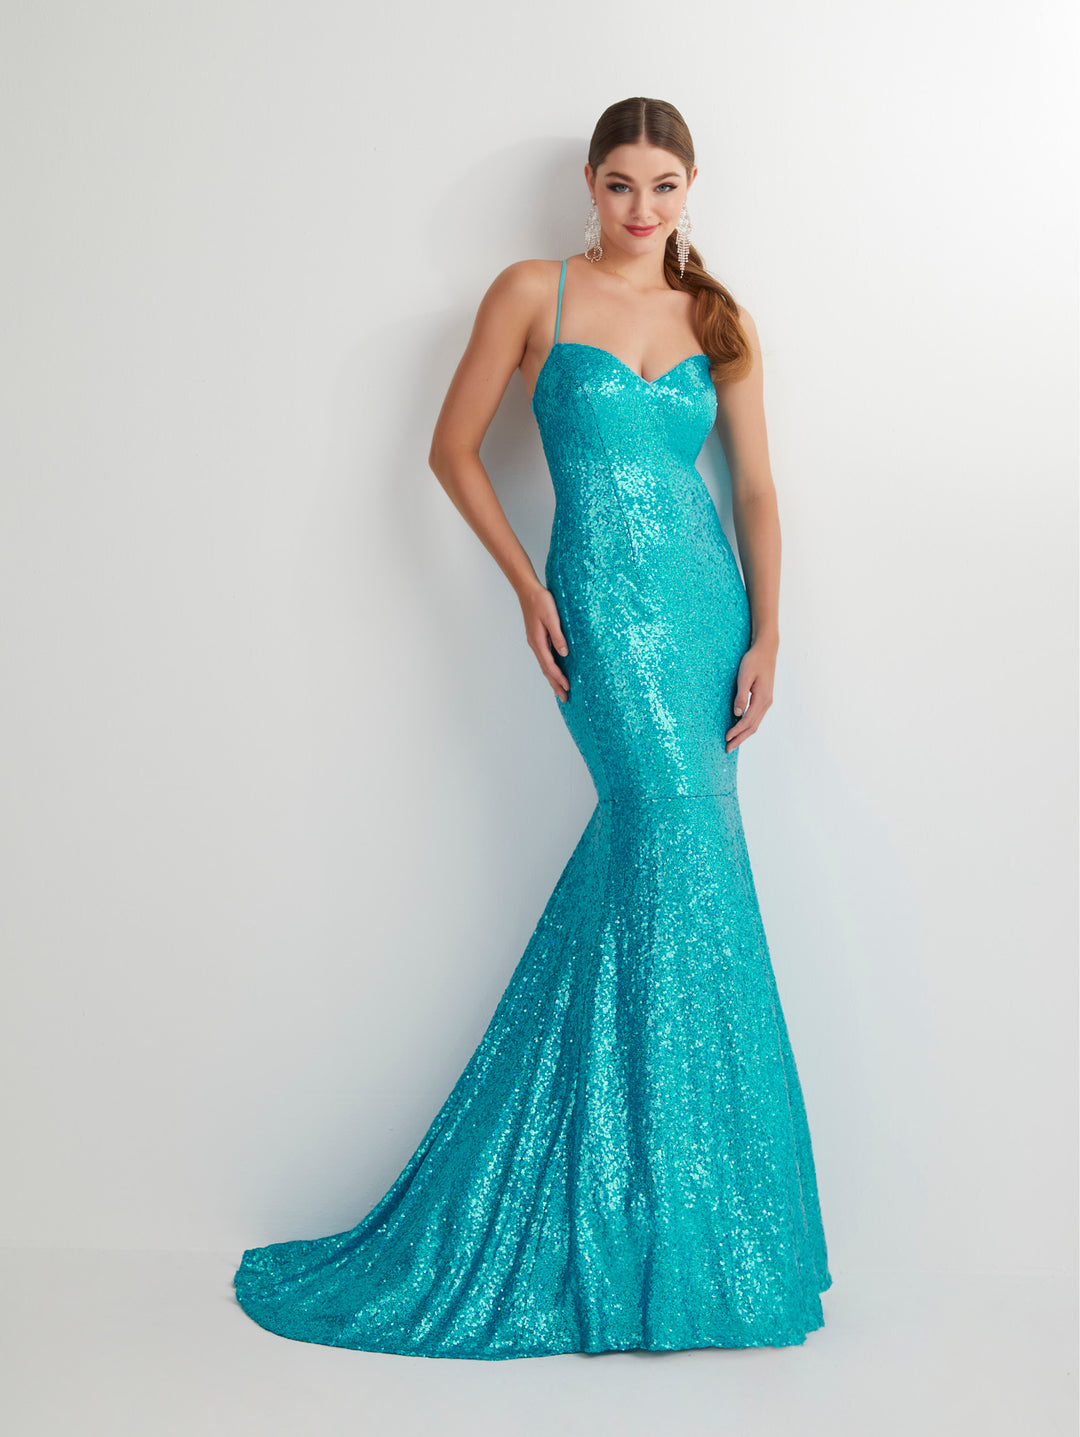 Sequin Sleeveless Sweetheart Mermaid Dress by Studio 17 12912